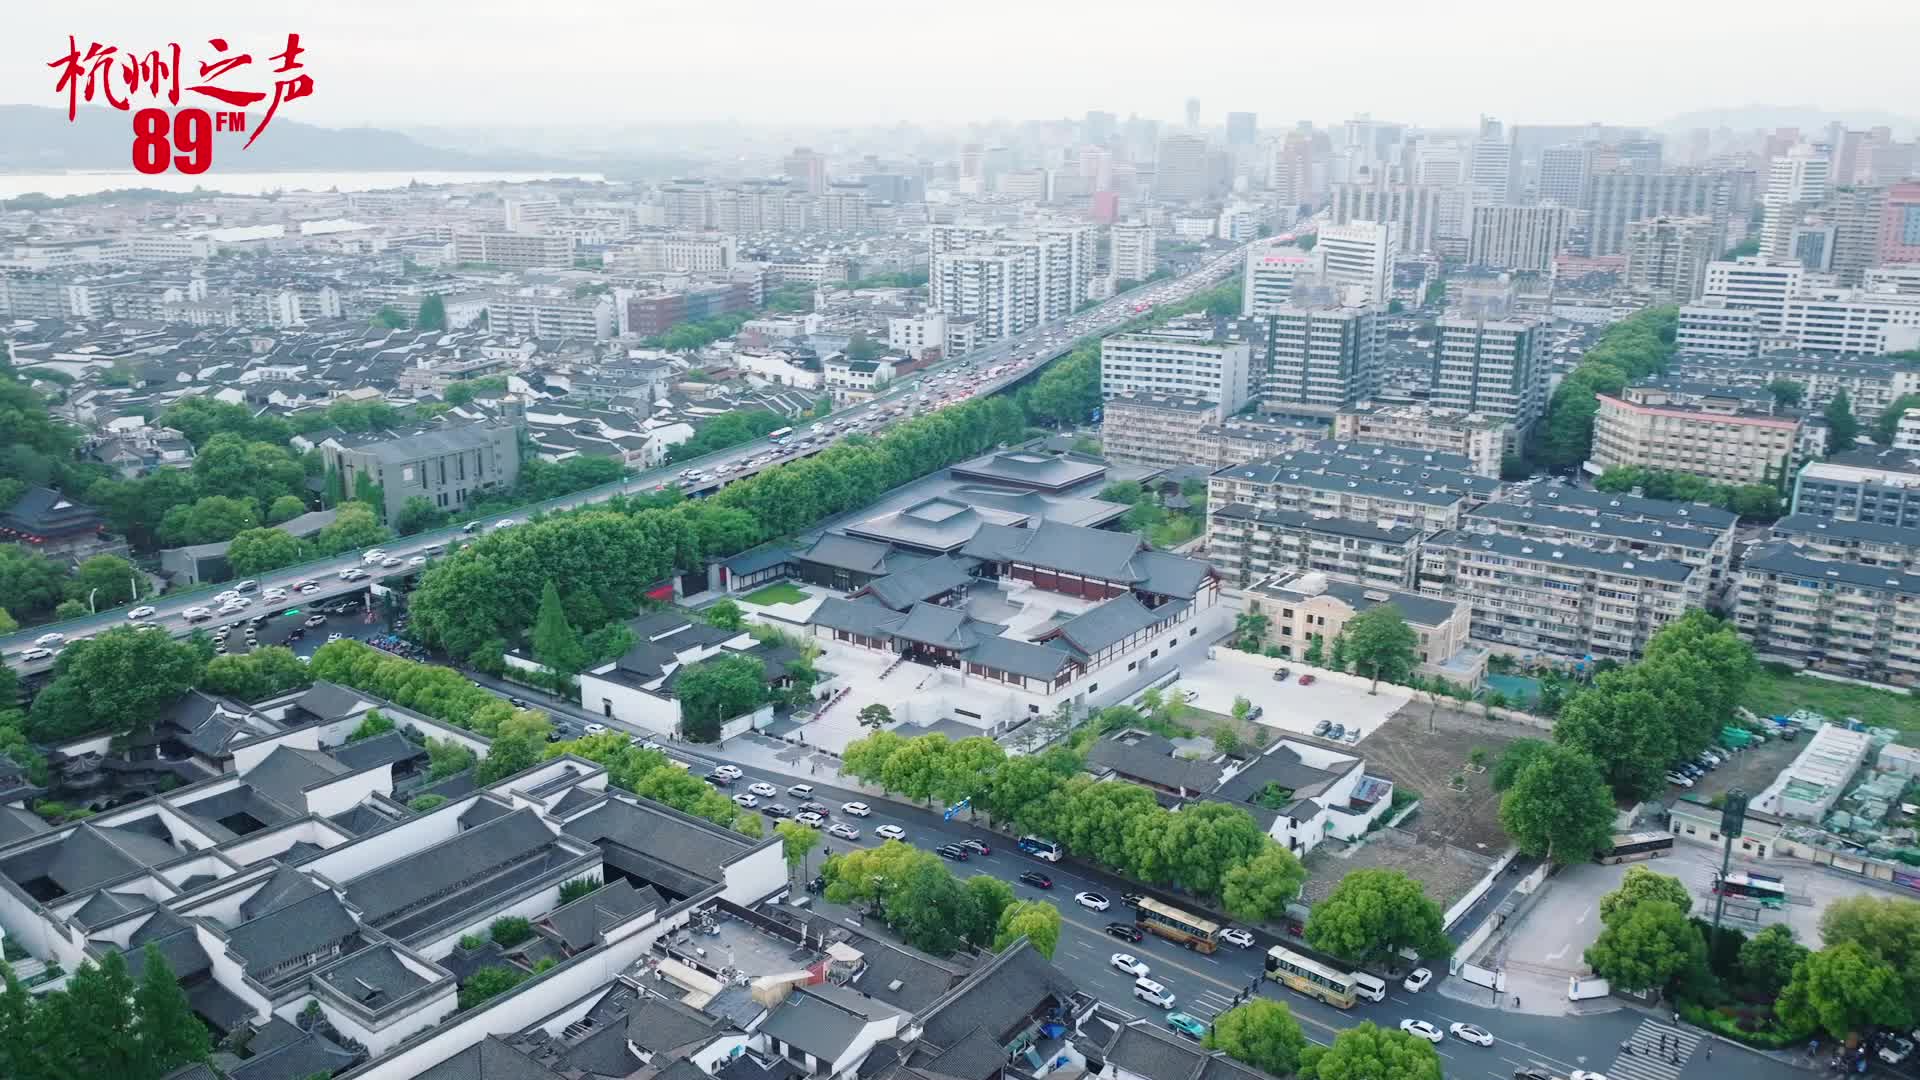 Exploring China's first neighborhood community in Shangcheng